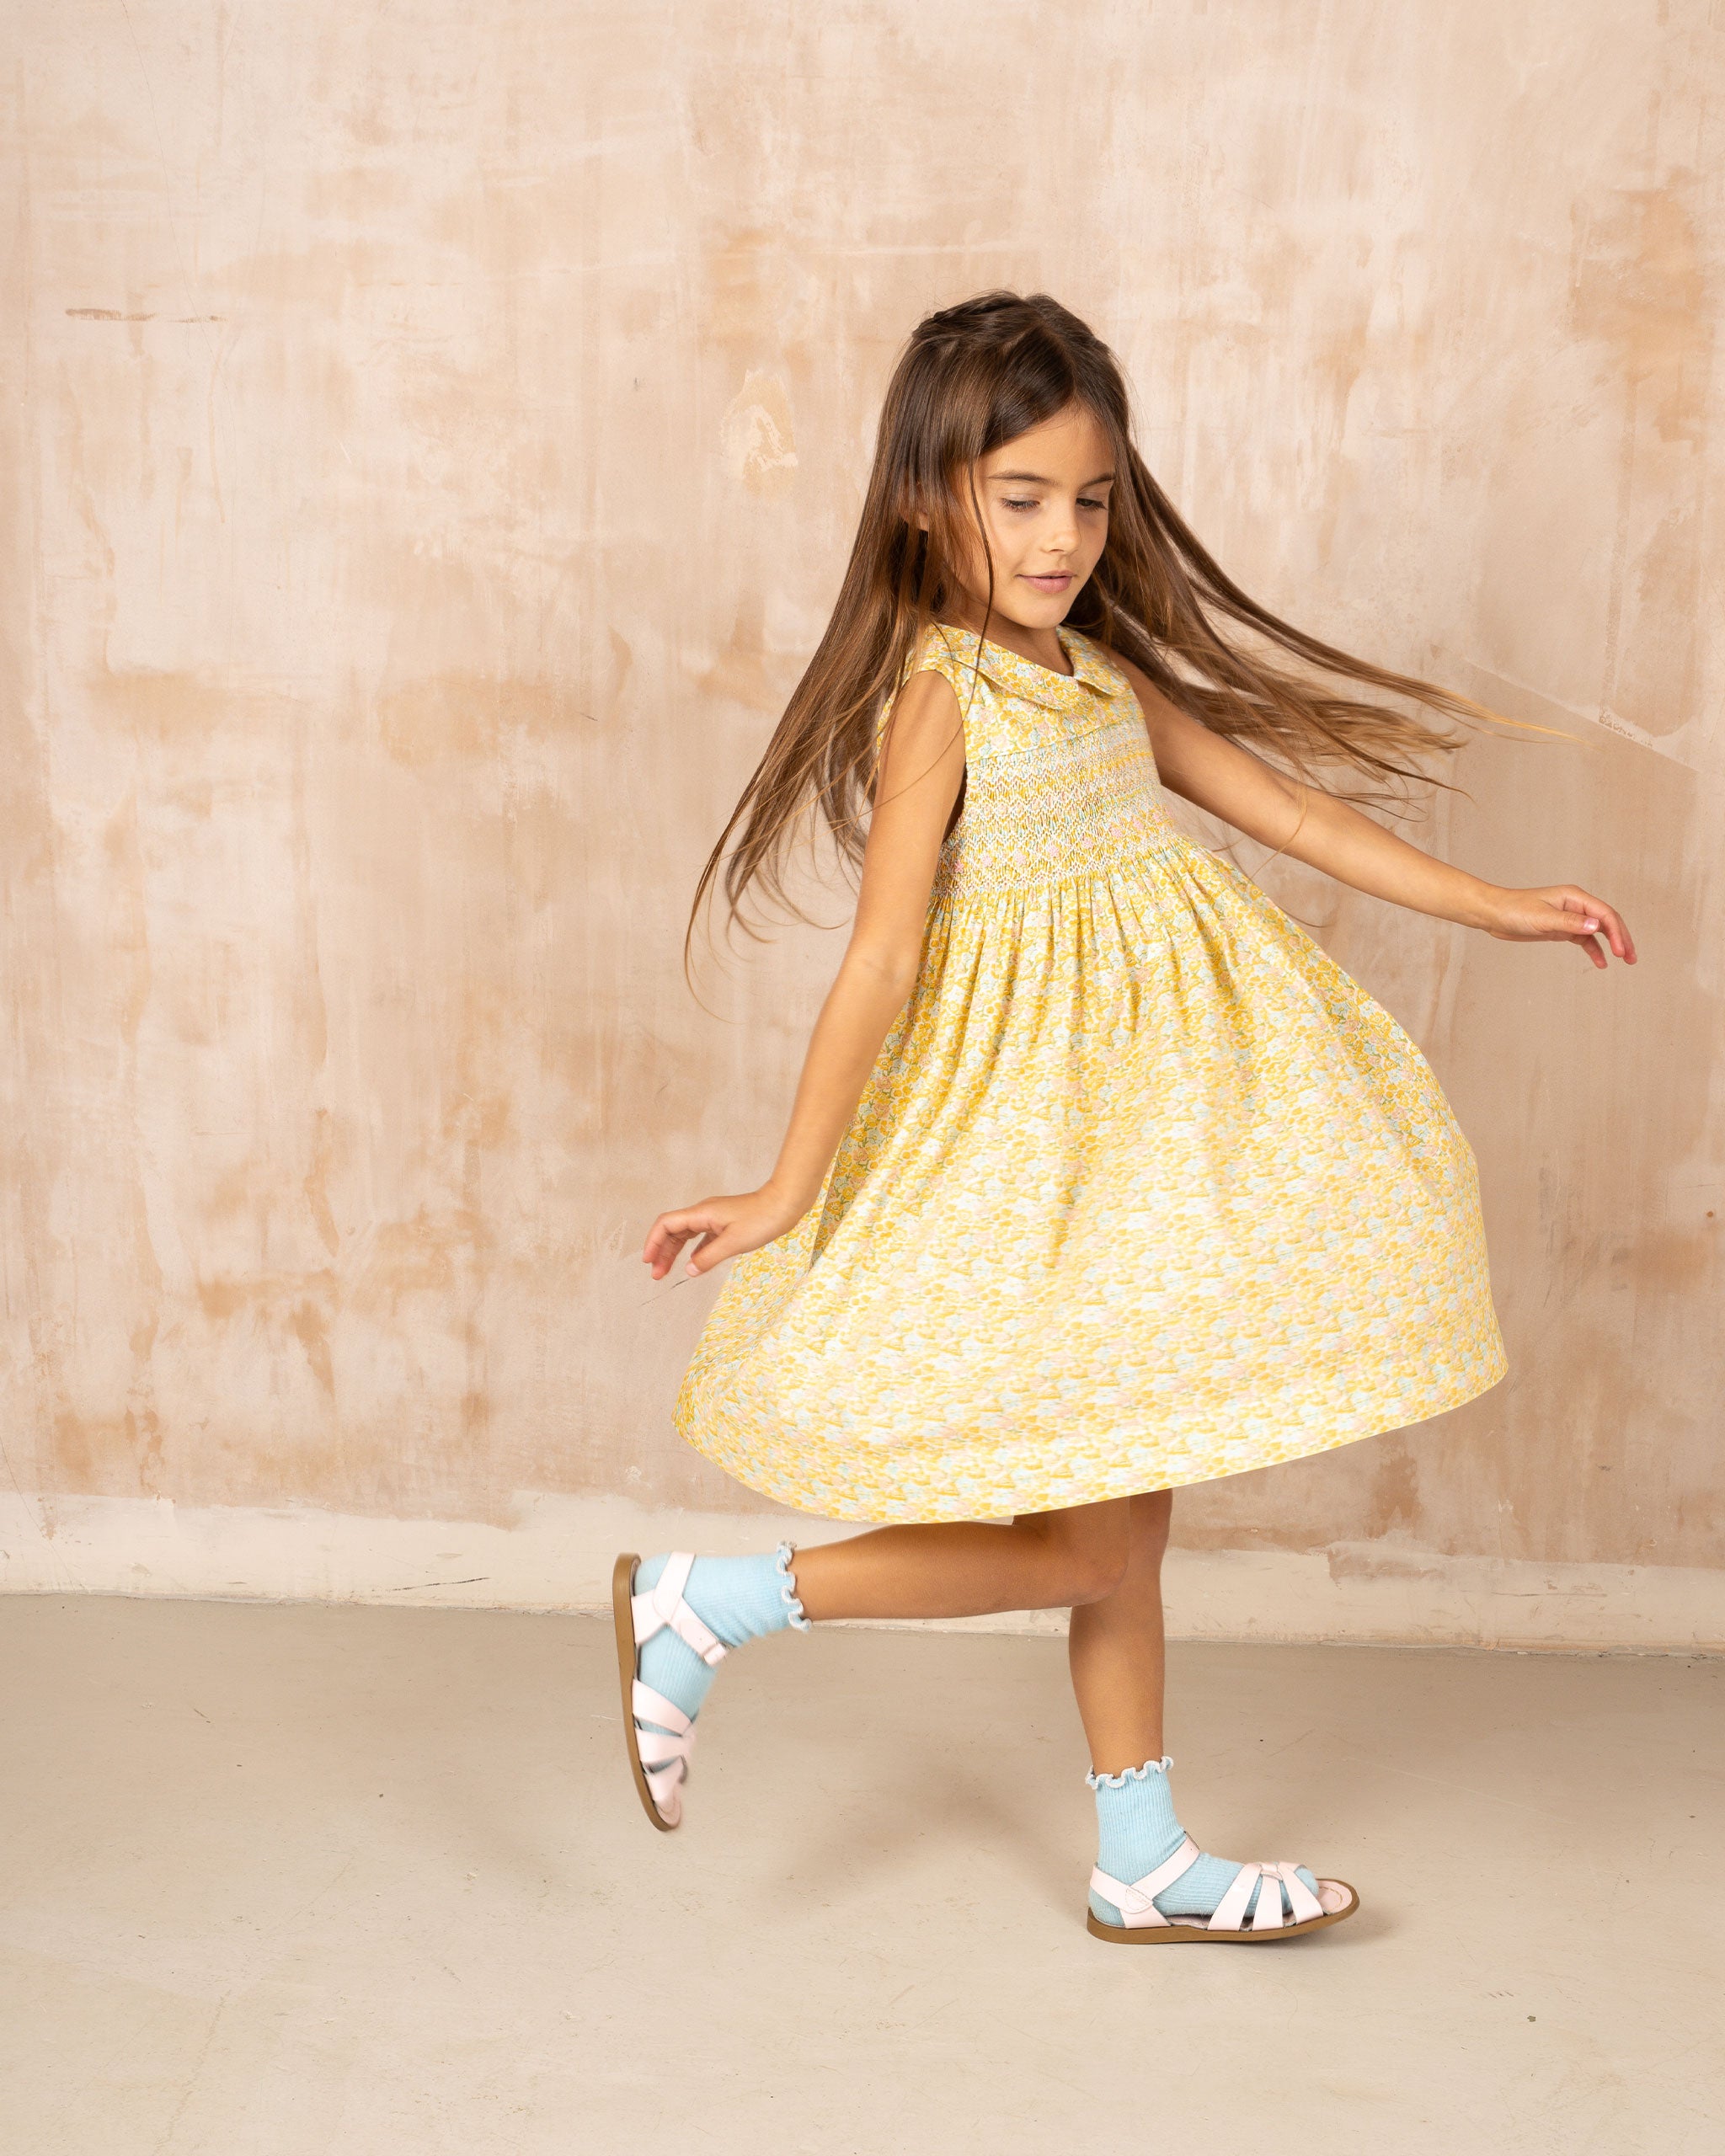 girl twirling in yellow smocked dress, spring fashion